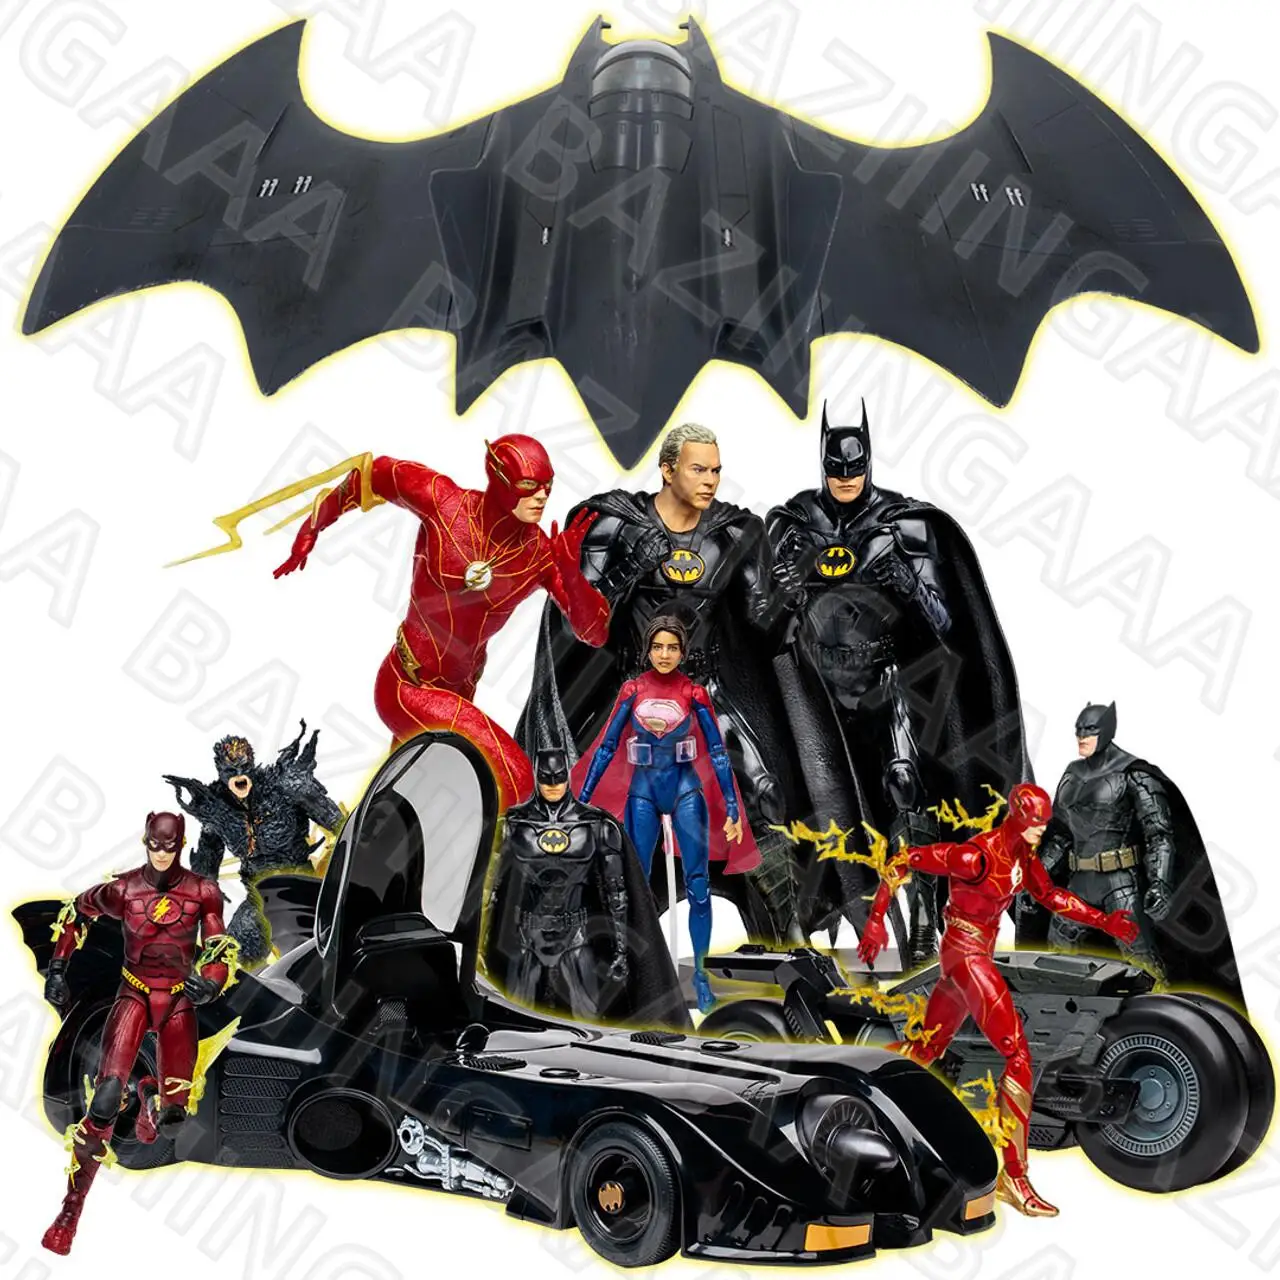 McFarlane Toys The Flash Movie Mega Bundle (12 pc) with MTS Exclusives Batmobile Batcycle Vehicle